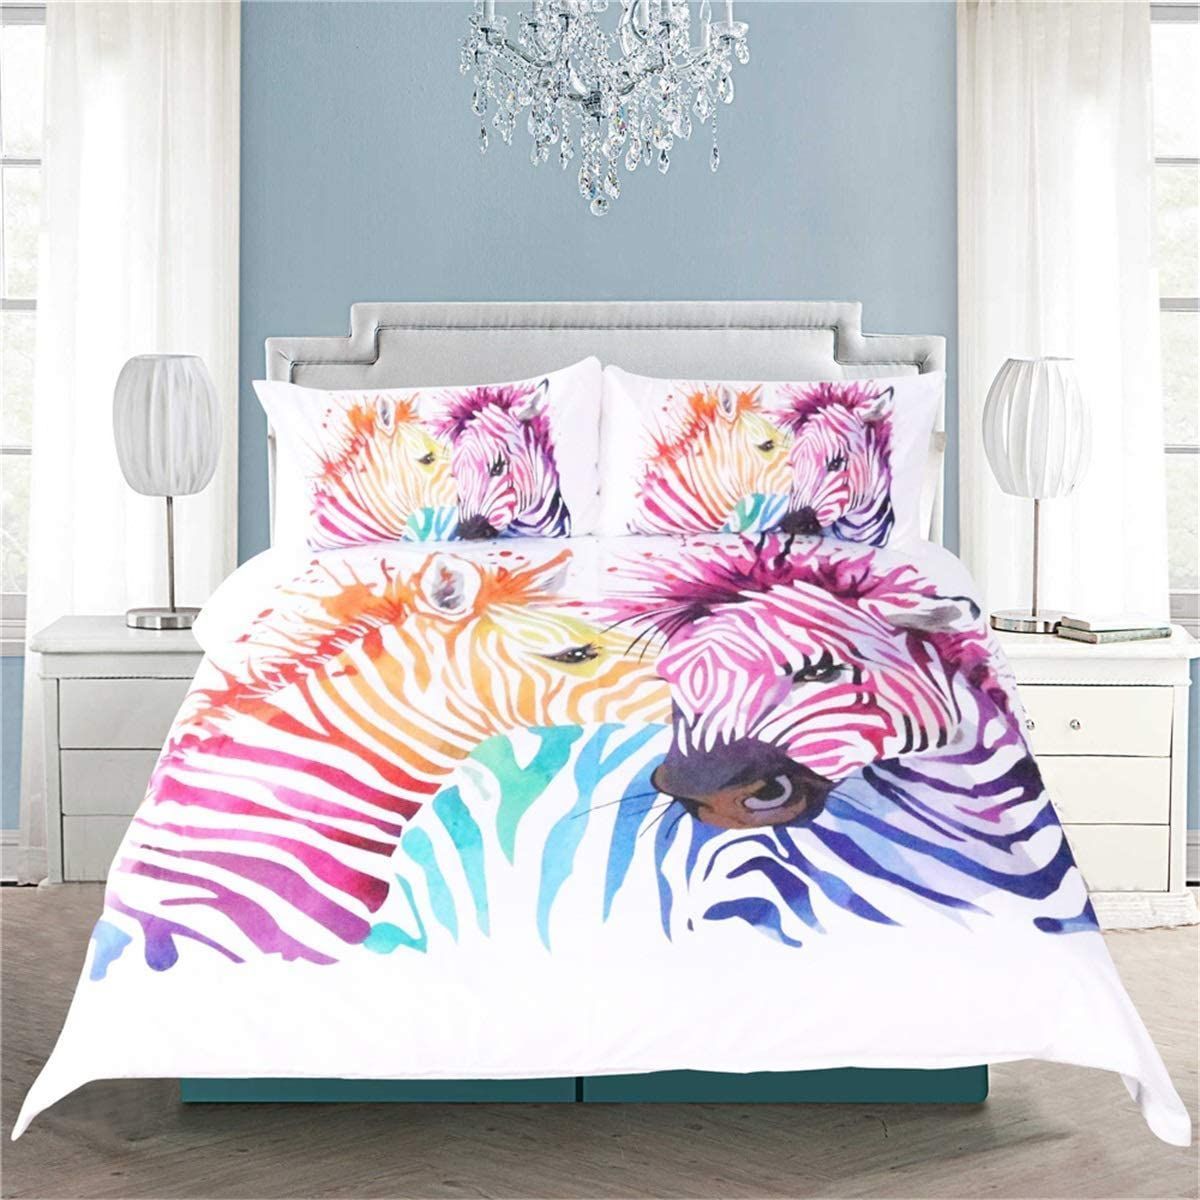 Zebra Cotton Bedding Sets